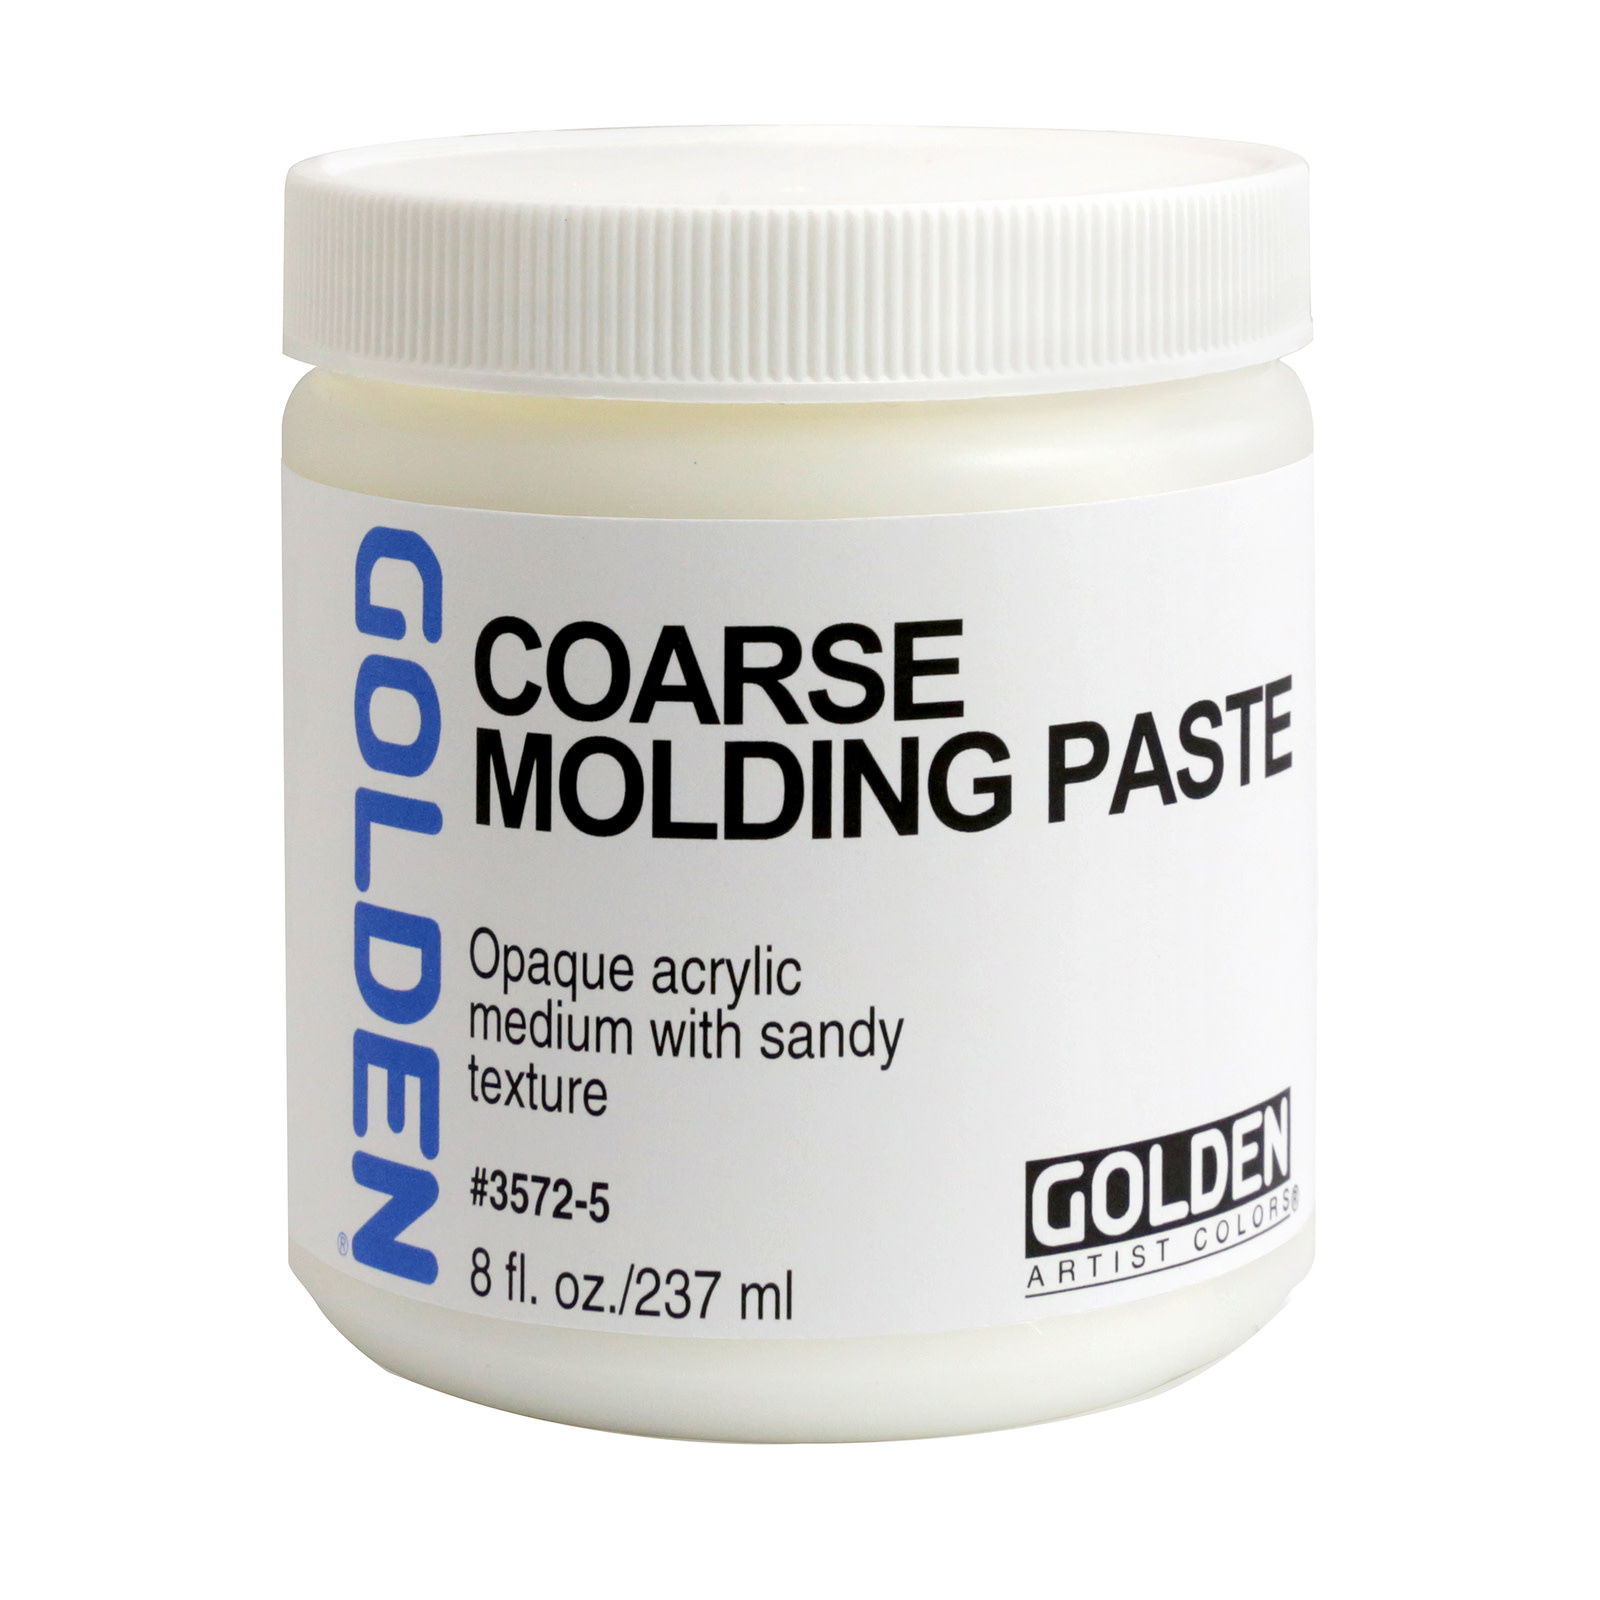 Golden Molding Pastes, Coarse, 8 oz.